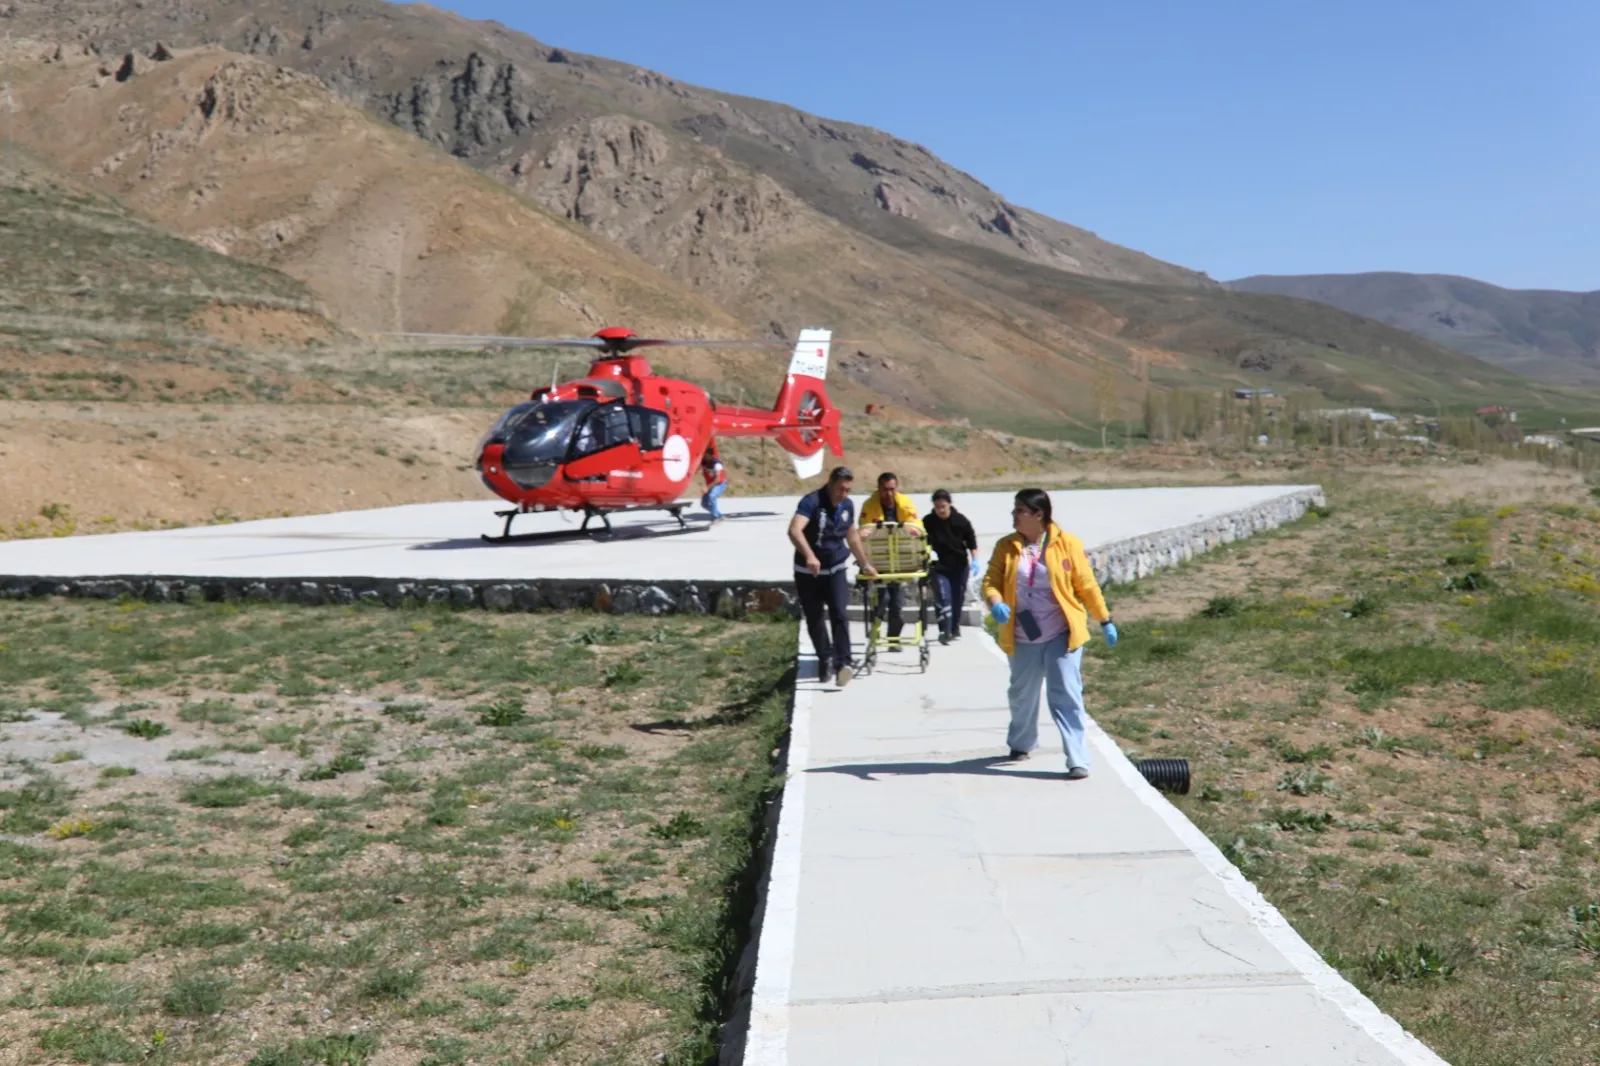 vanda kalp krizi geciren hastaya ambulans helikopterle sevk 1 zahnmMgL